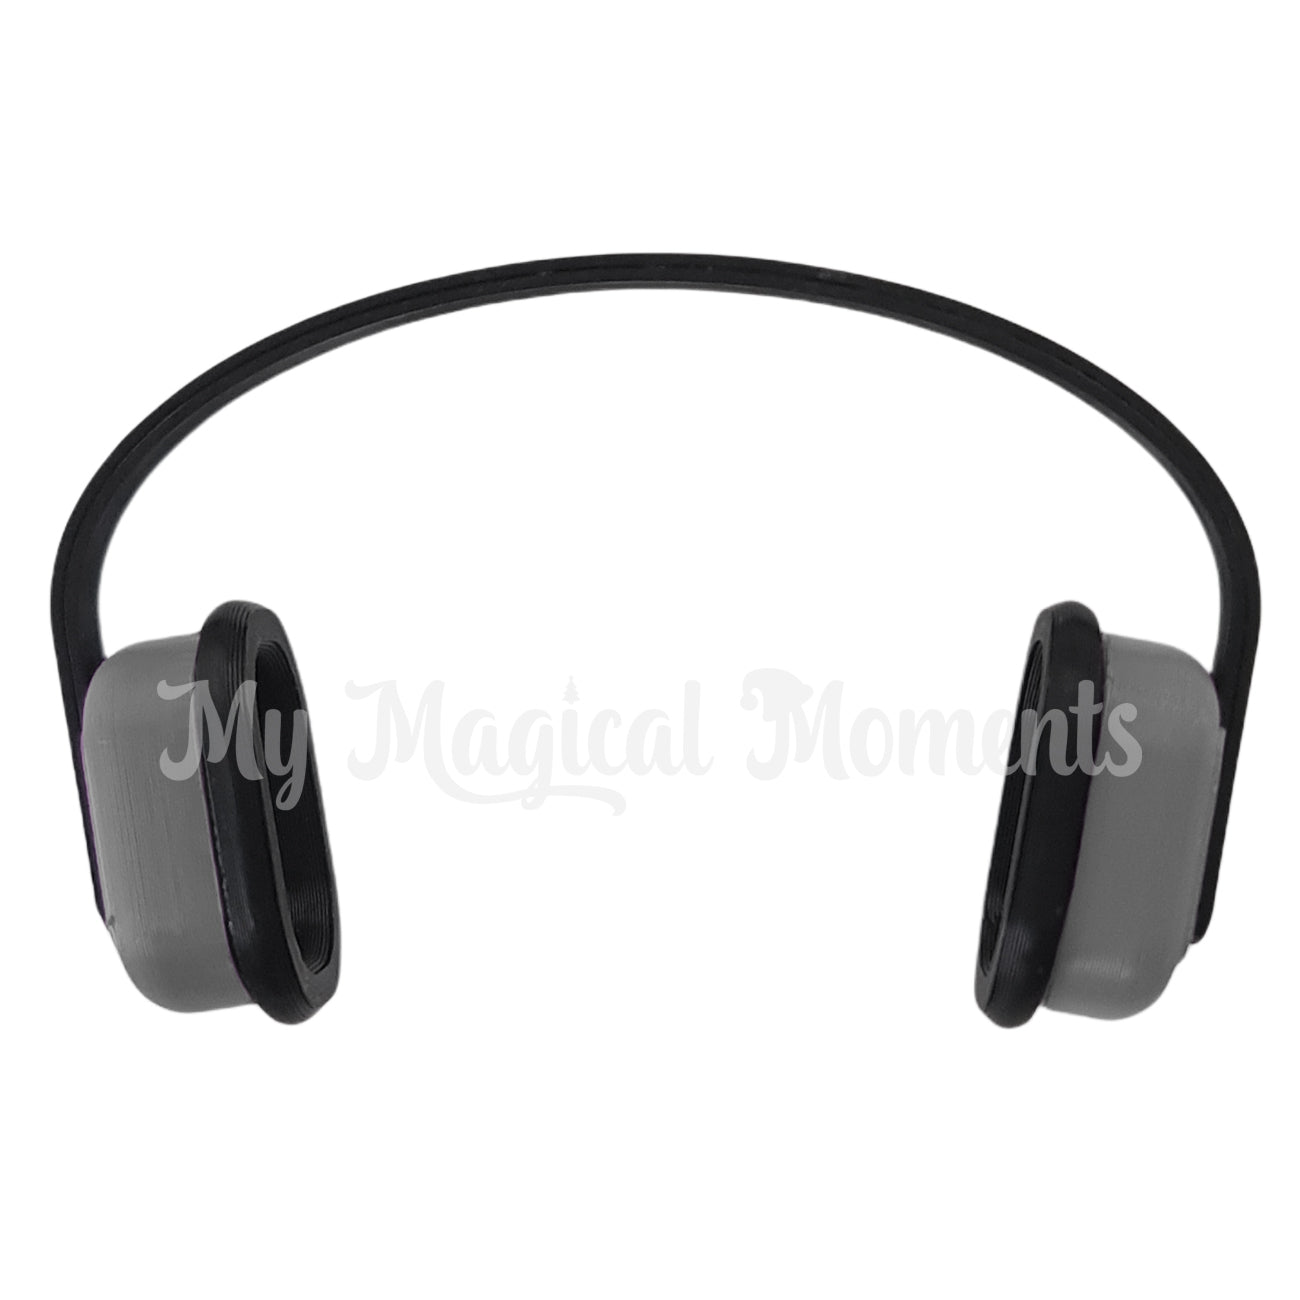 Elf Sized sensory headphones - Silver